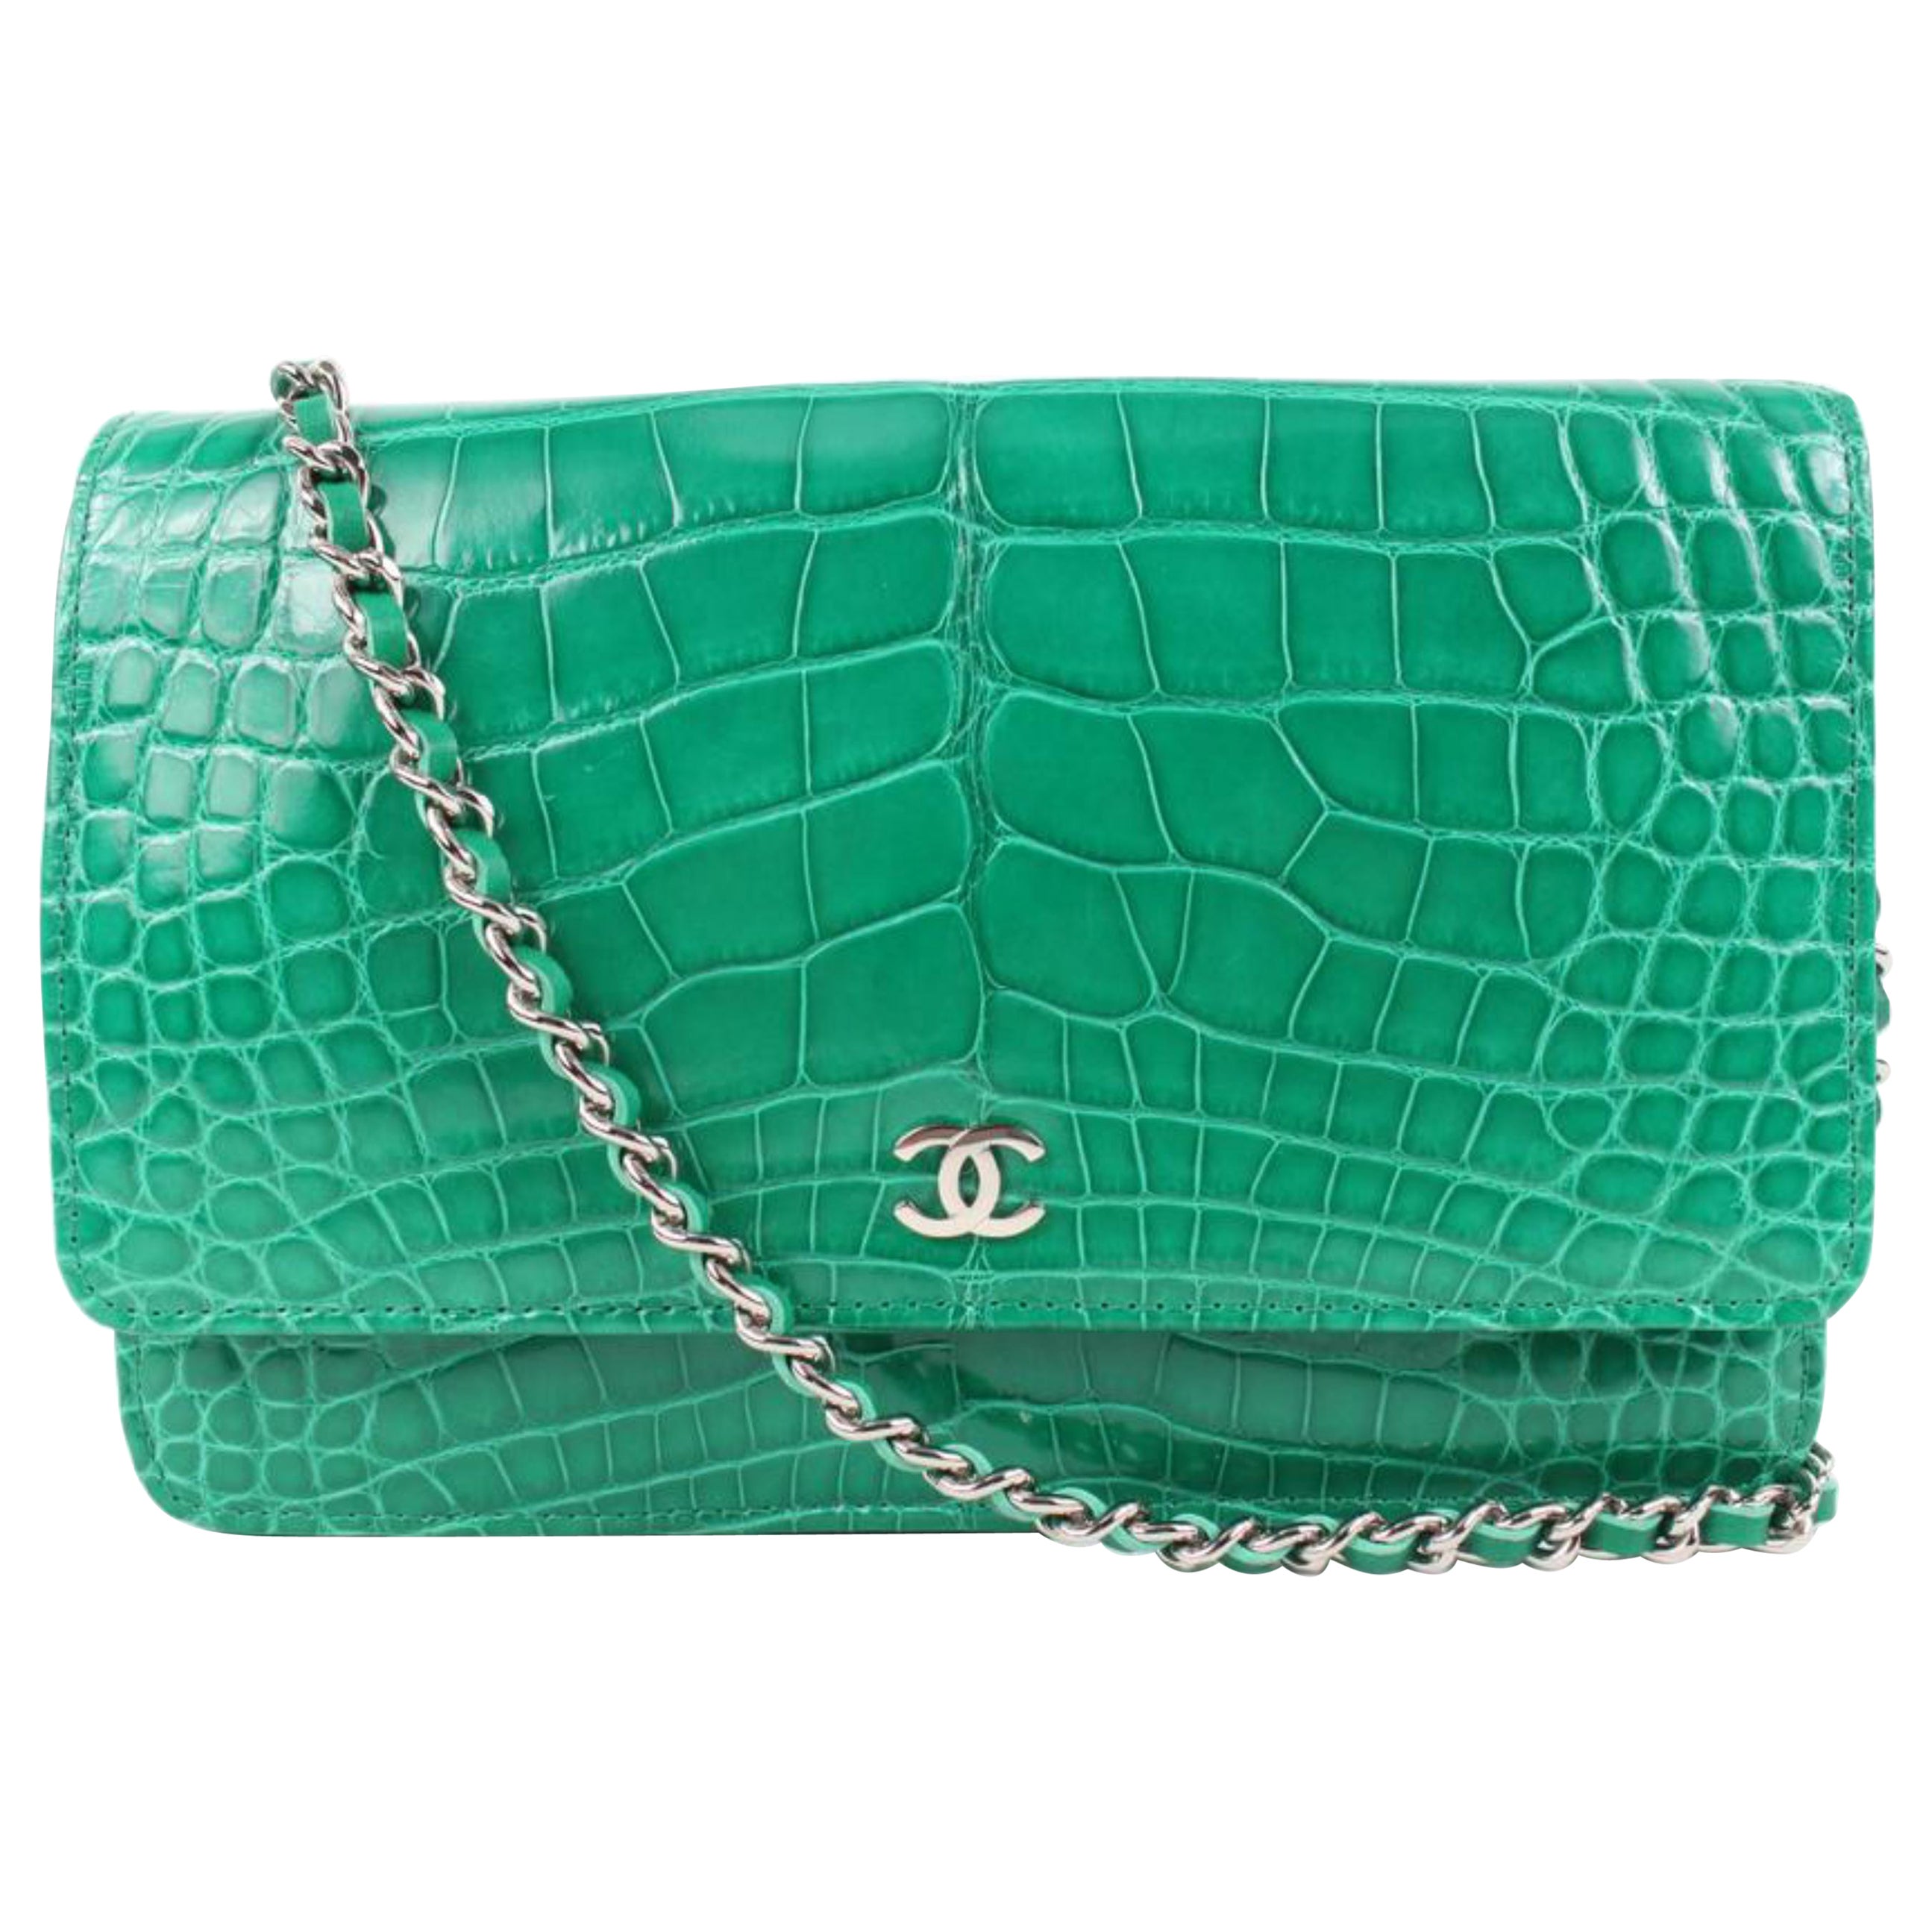 Chanel Ultra Rare Emerald Green Alligator Wallet on Chain SHW Woc 46cz414s